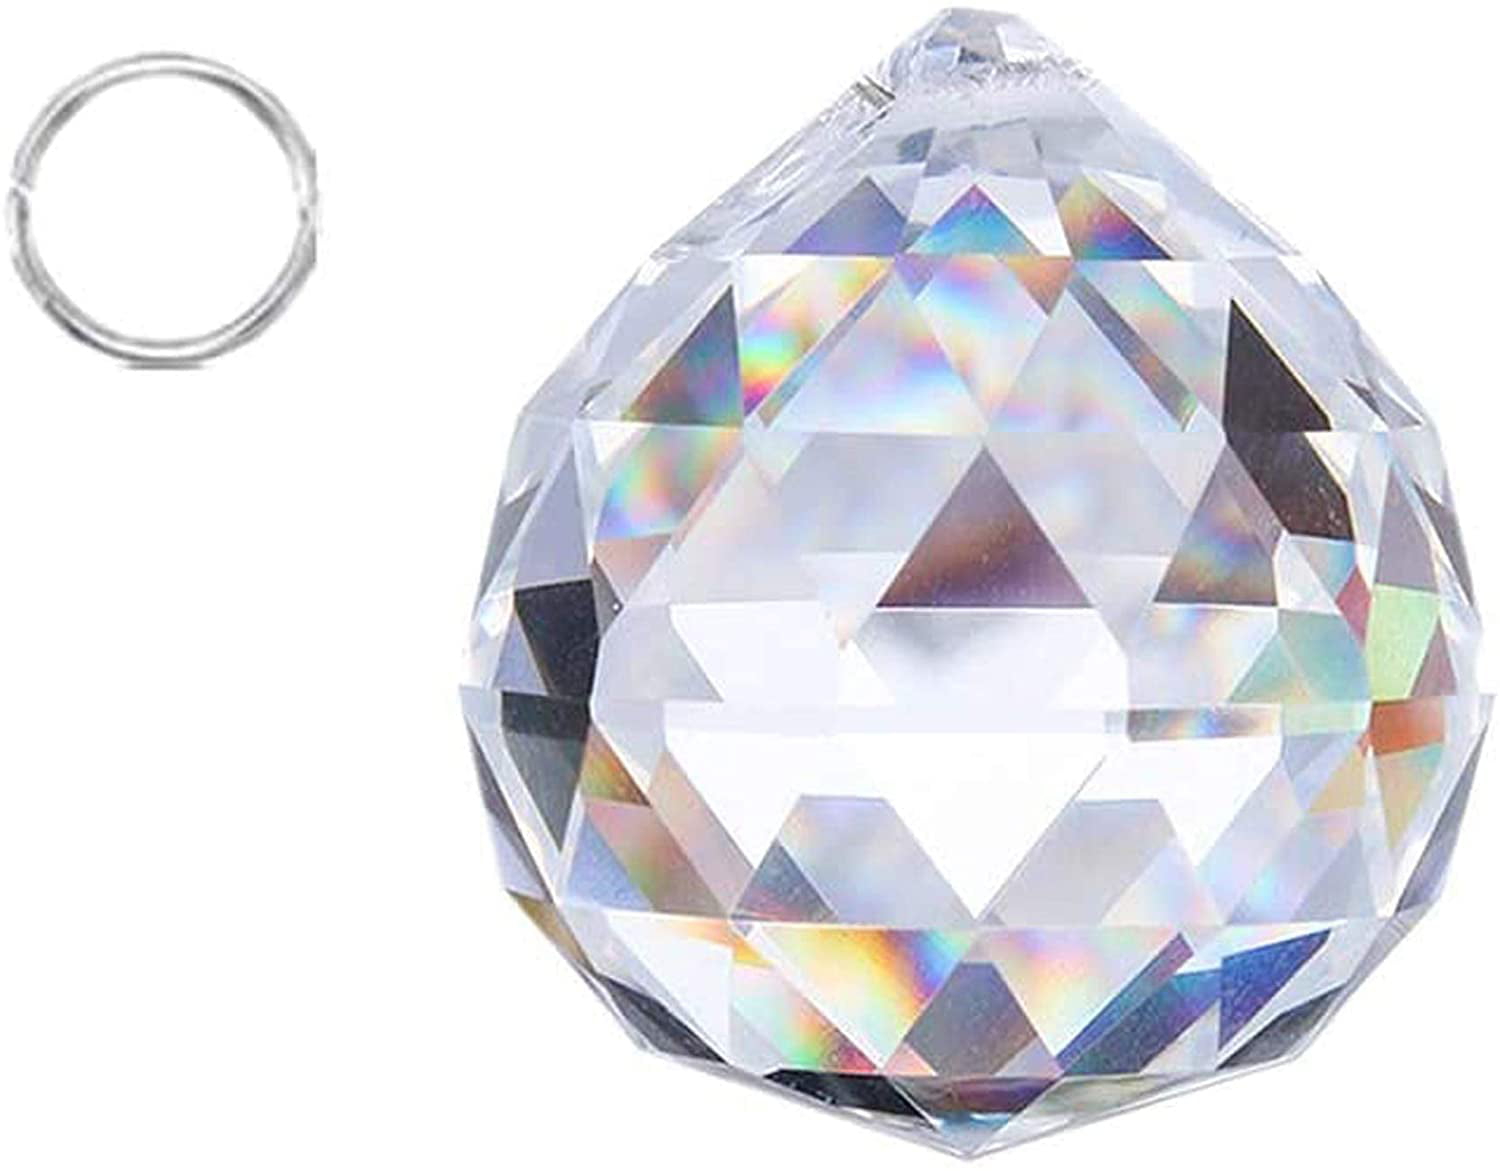 Green H&D 10pcs 20mm Glass Crystal Ball Prisms Chandelier Drops Wedding Decorations Curtain Pendants Parts